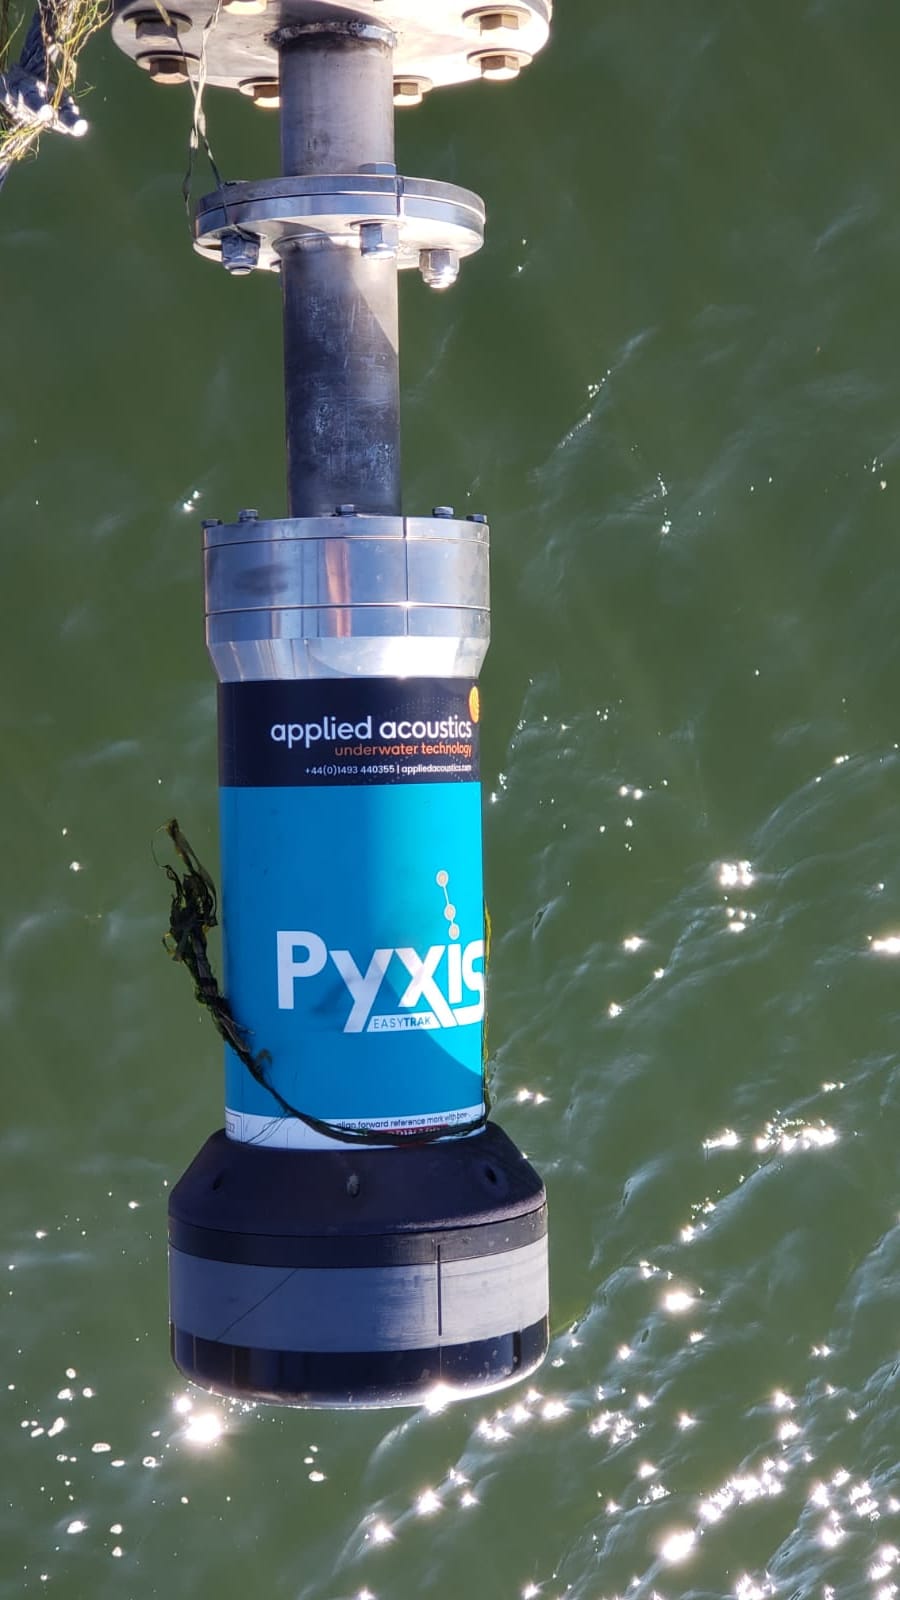 
高性能USBL 水中位置測位装置「Pyxis INS + USBL」
